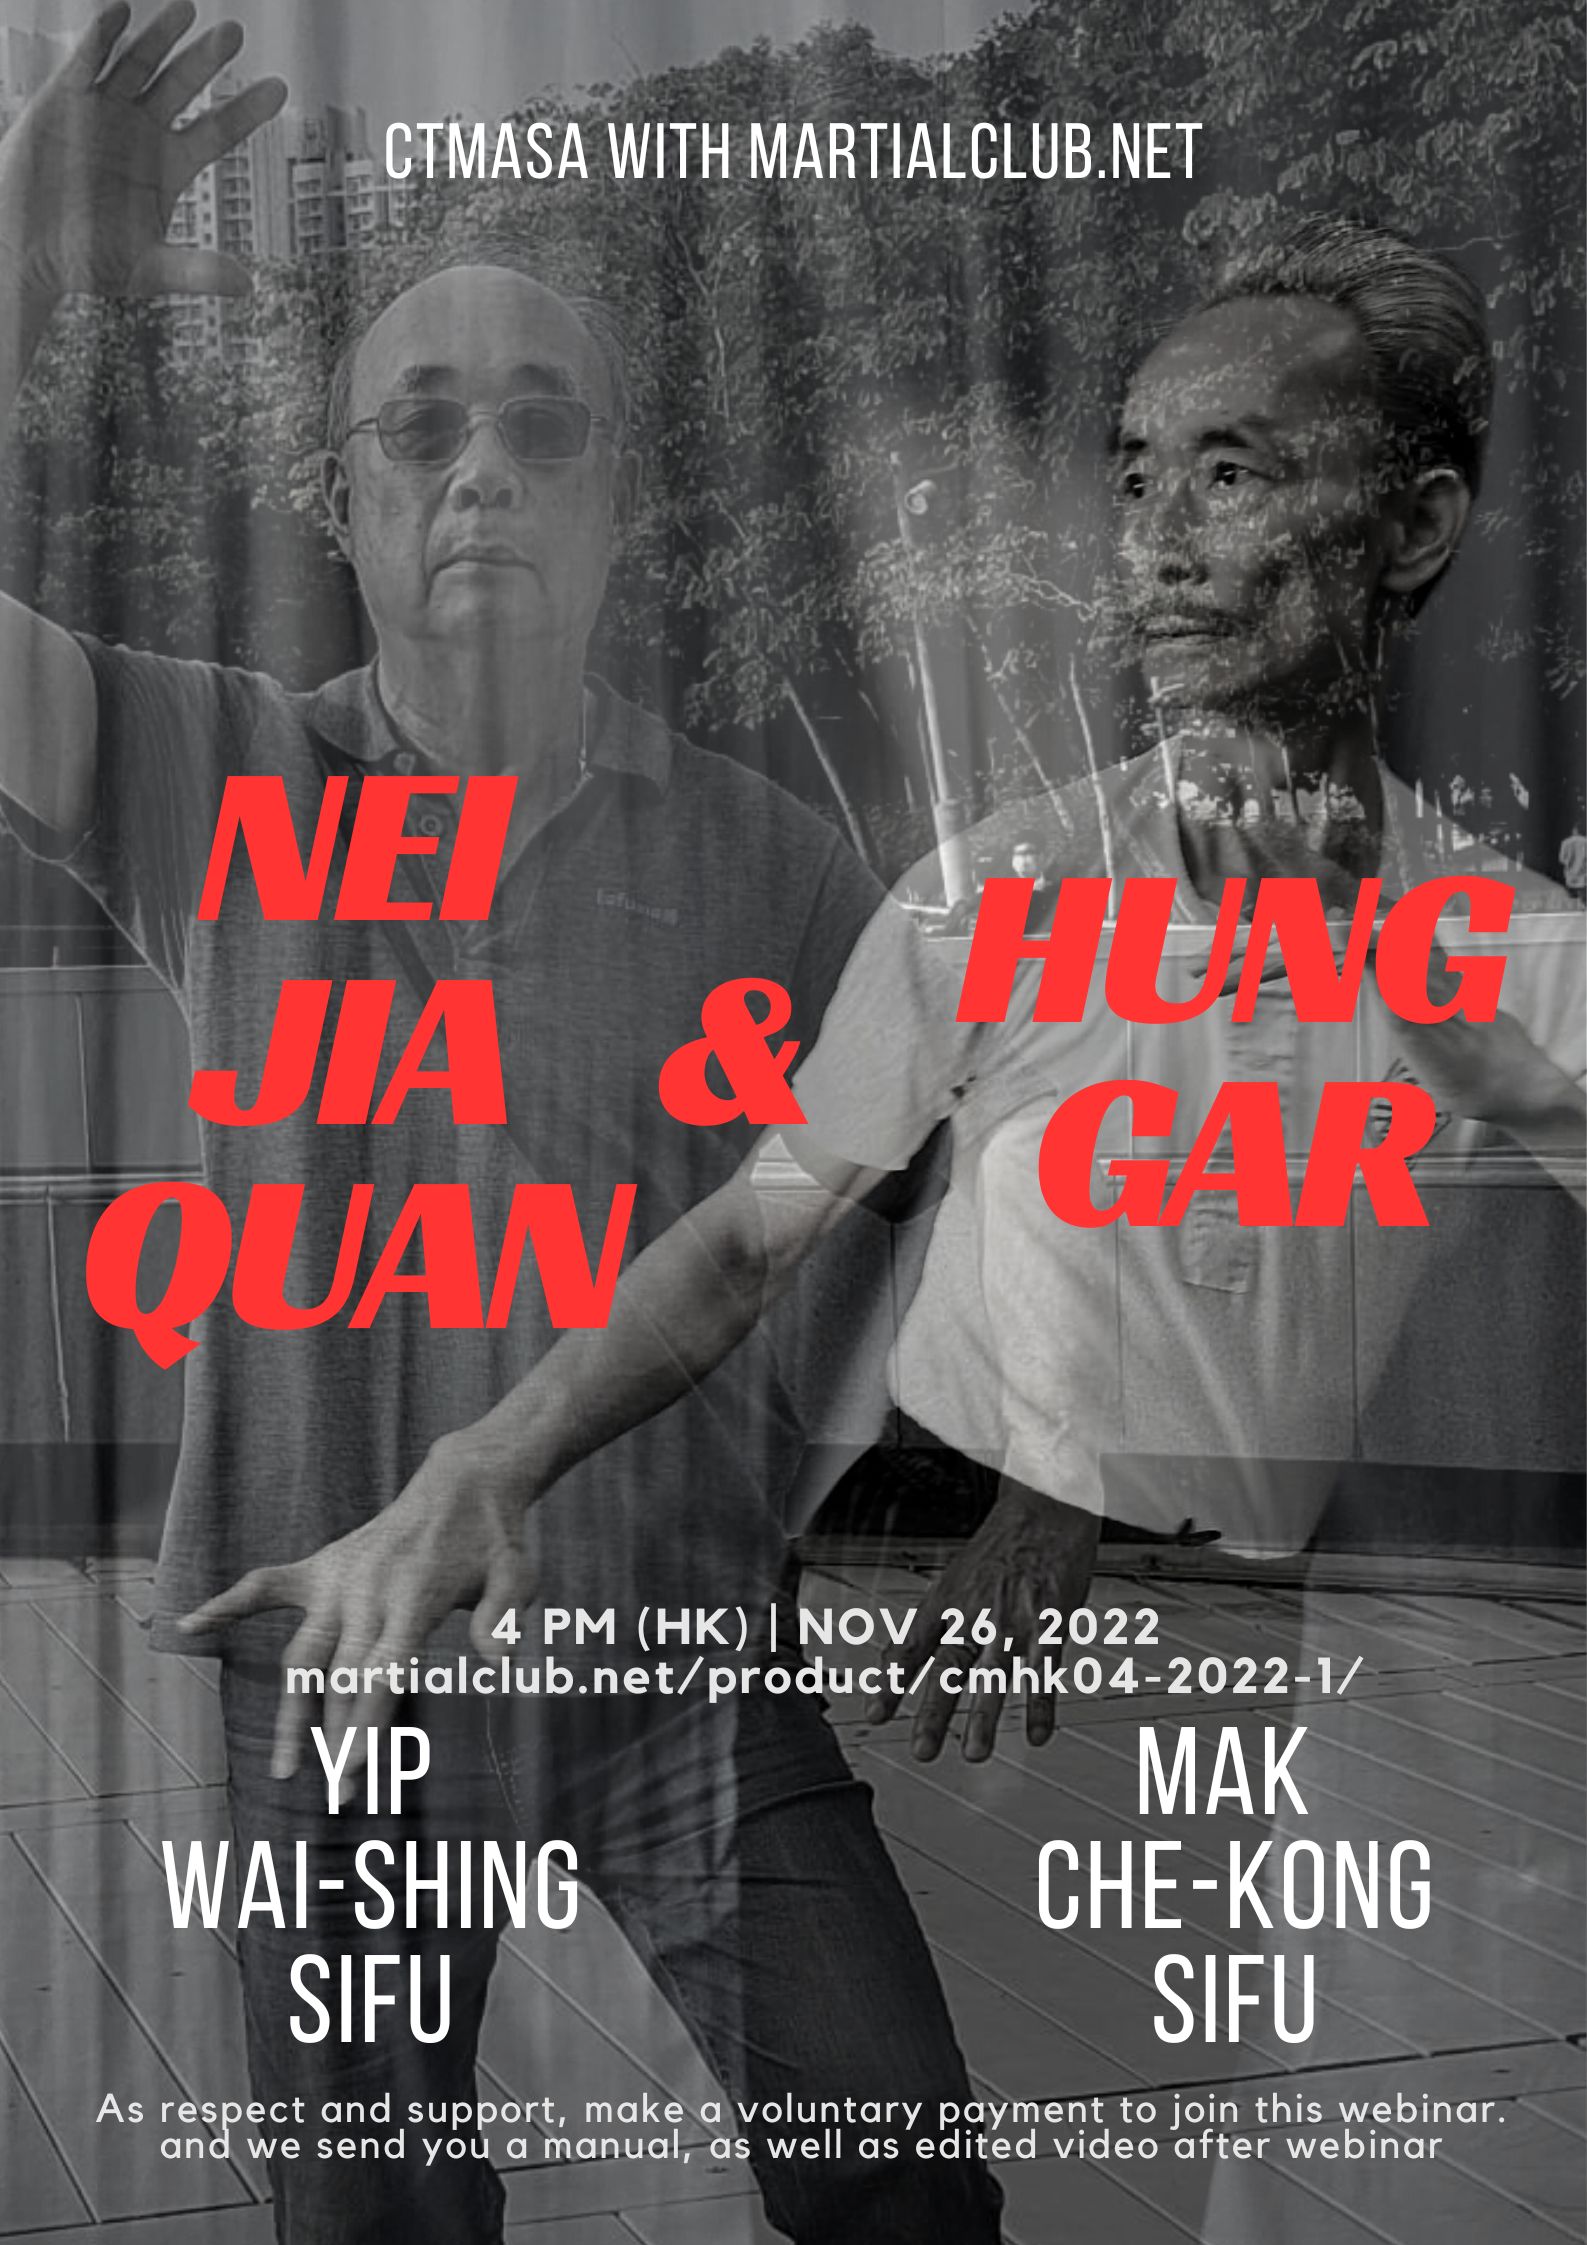 Hung Gar & Nei Jia Quan Crossover Part 1